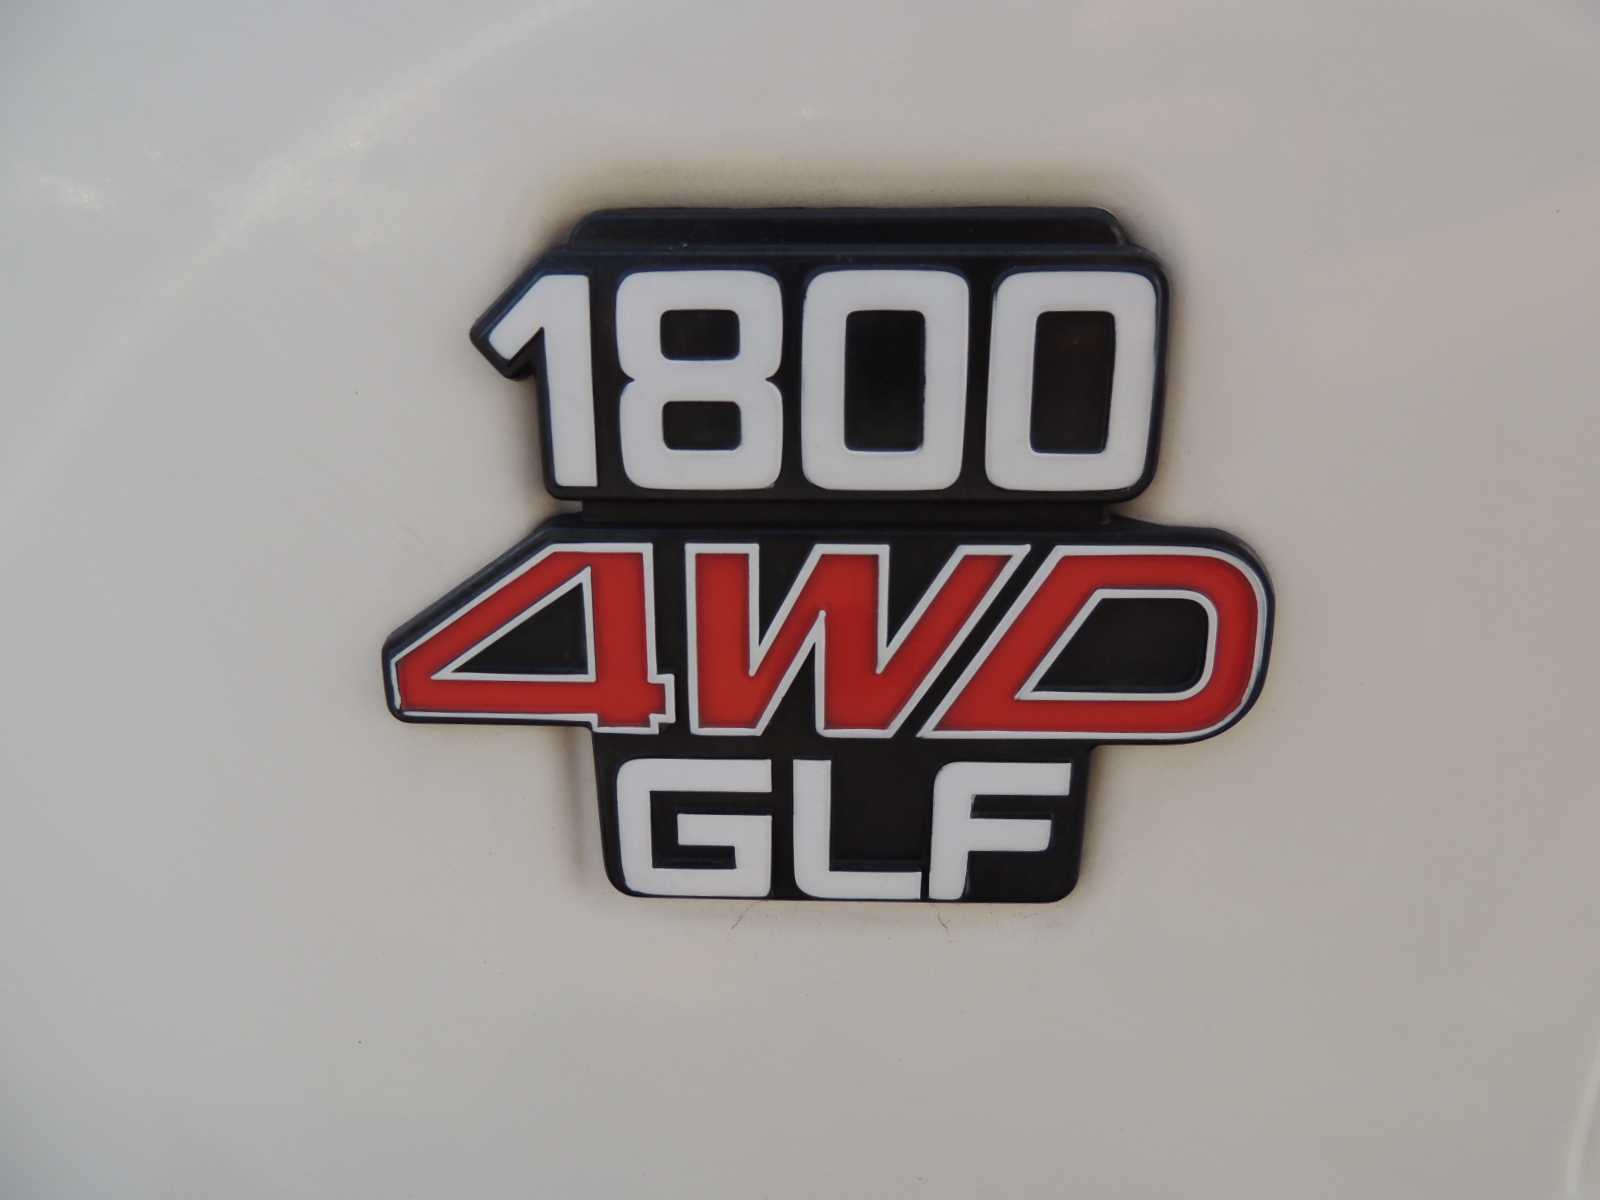 Subaru 1800 GLF 4WD 1983 (6)